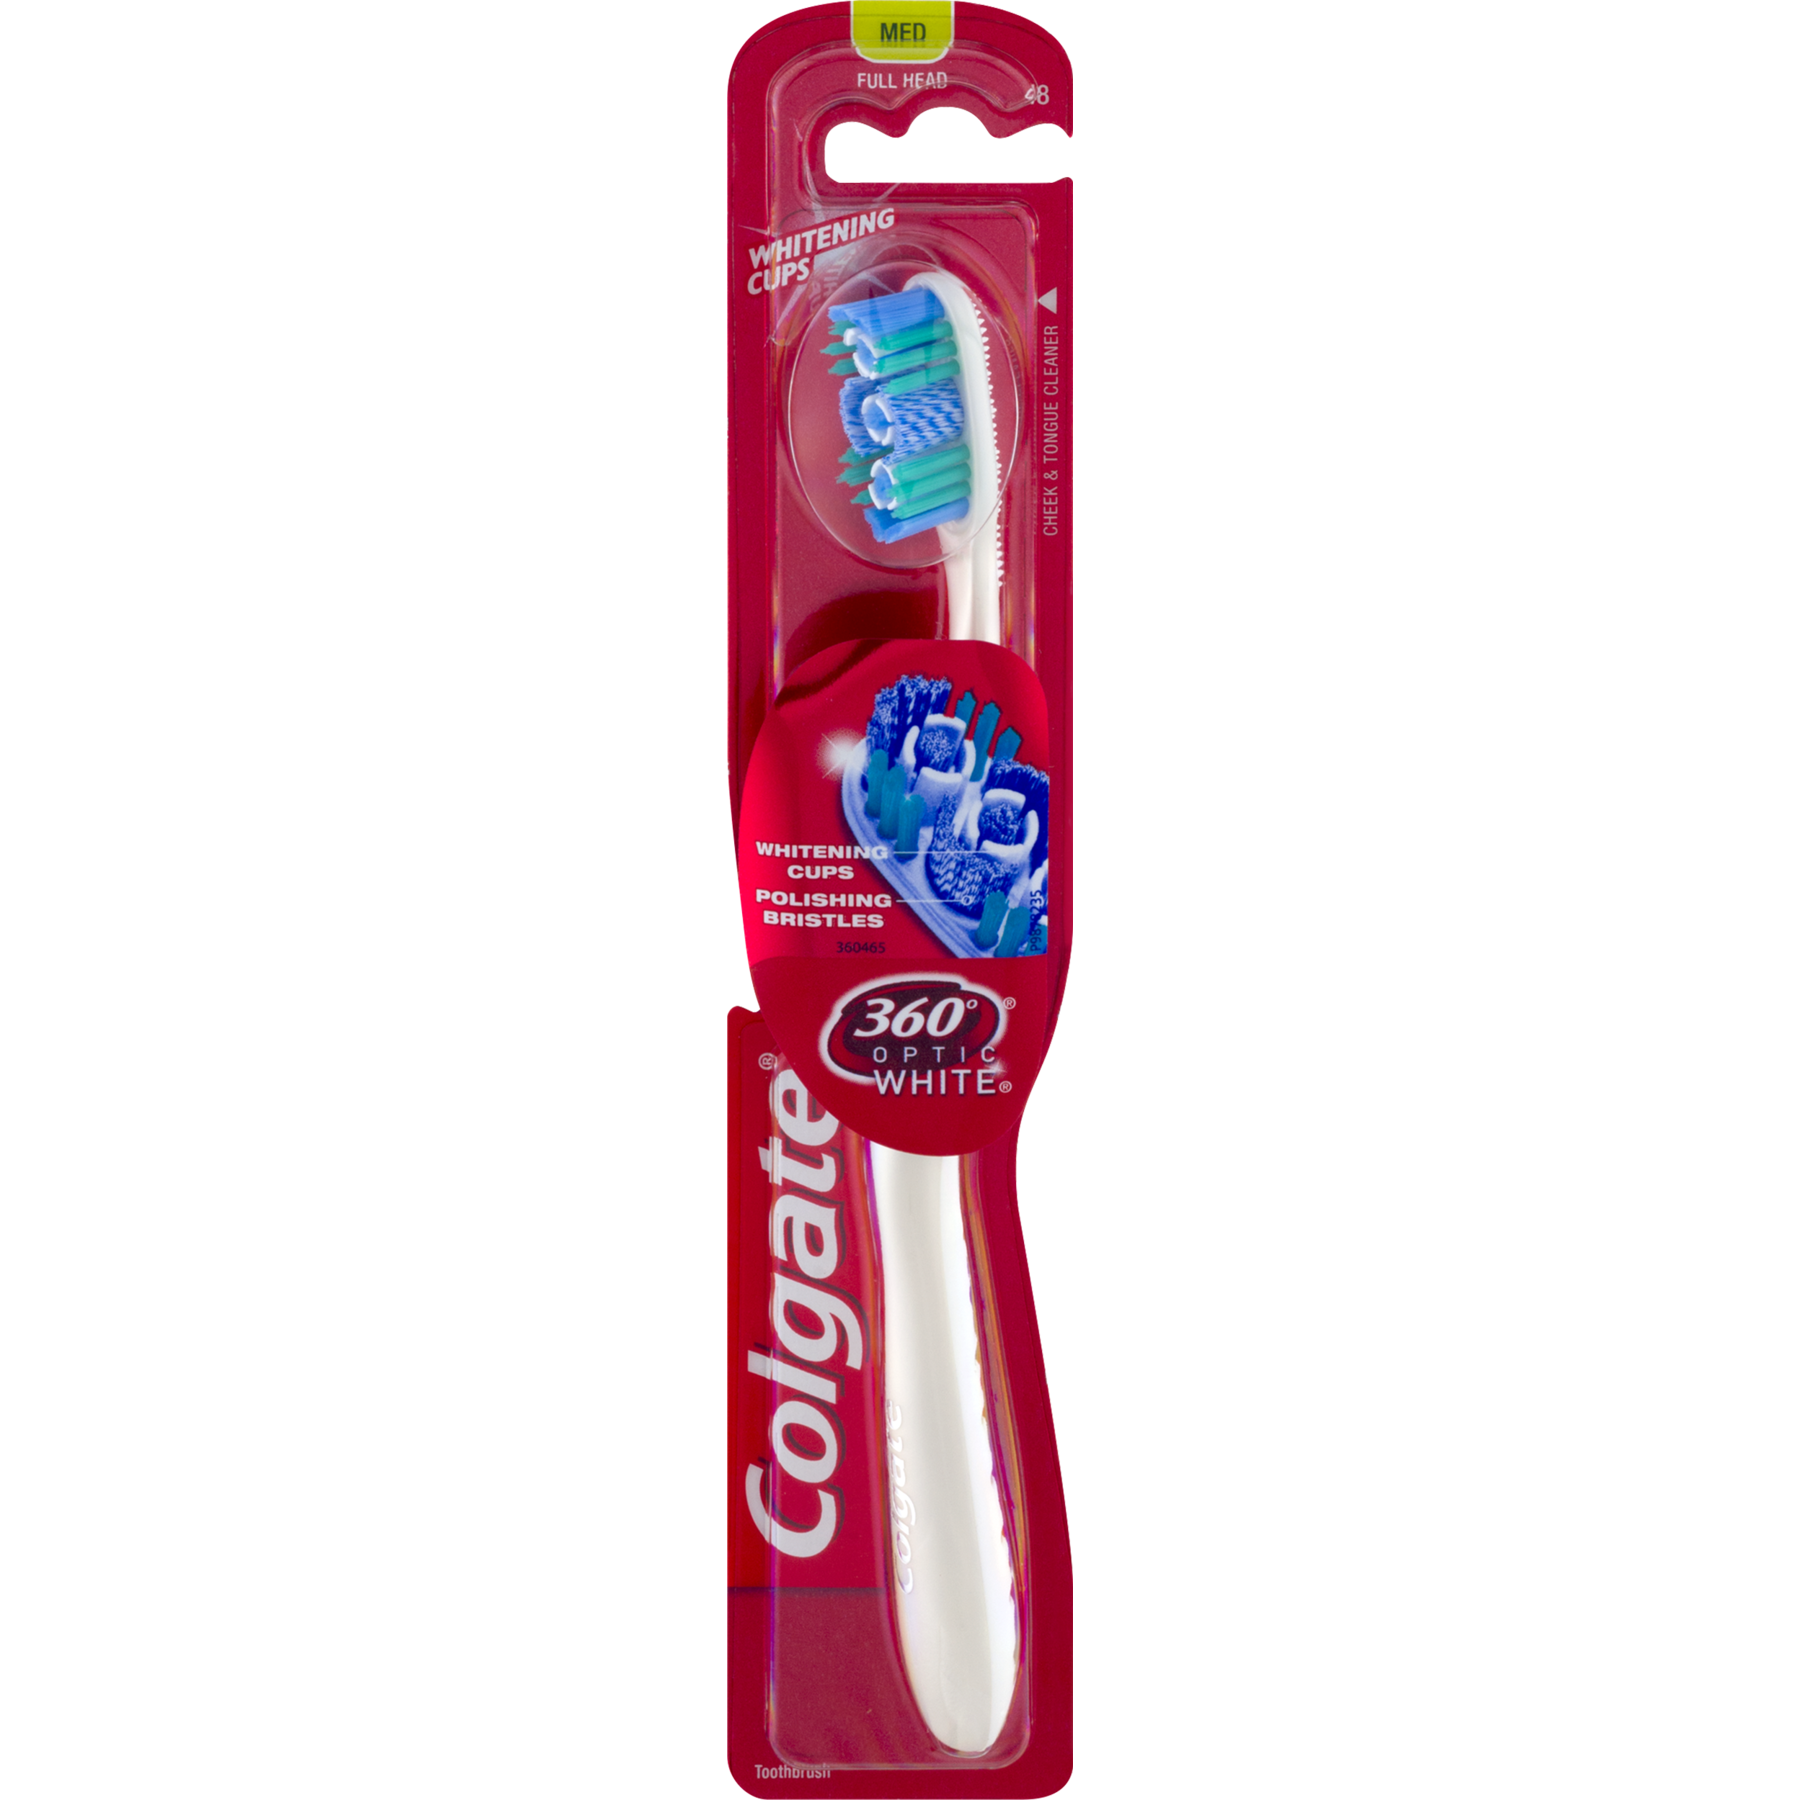 Colgate 360 Optic White Toothbrush, Medium, 1 Count - image 4 of 6